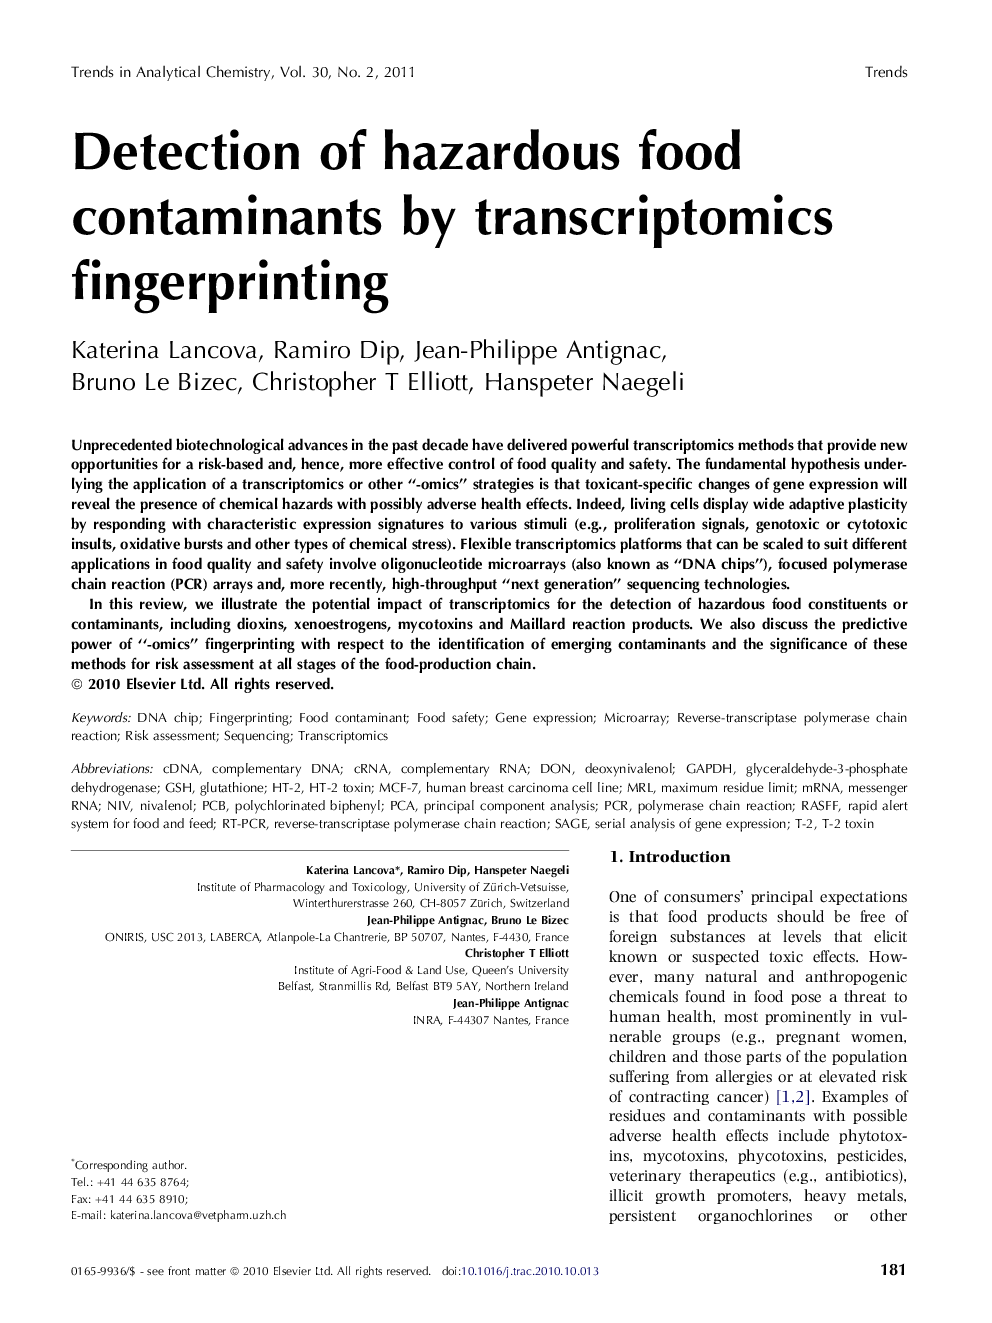 Detection of hazardous food contaminants by transcriptomics fingerprinting